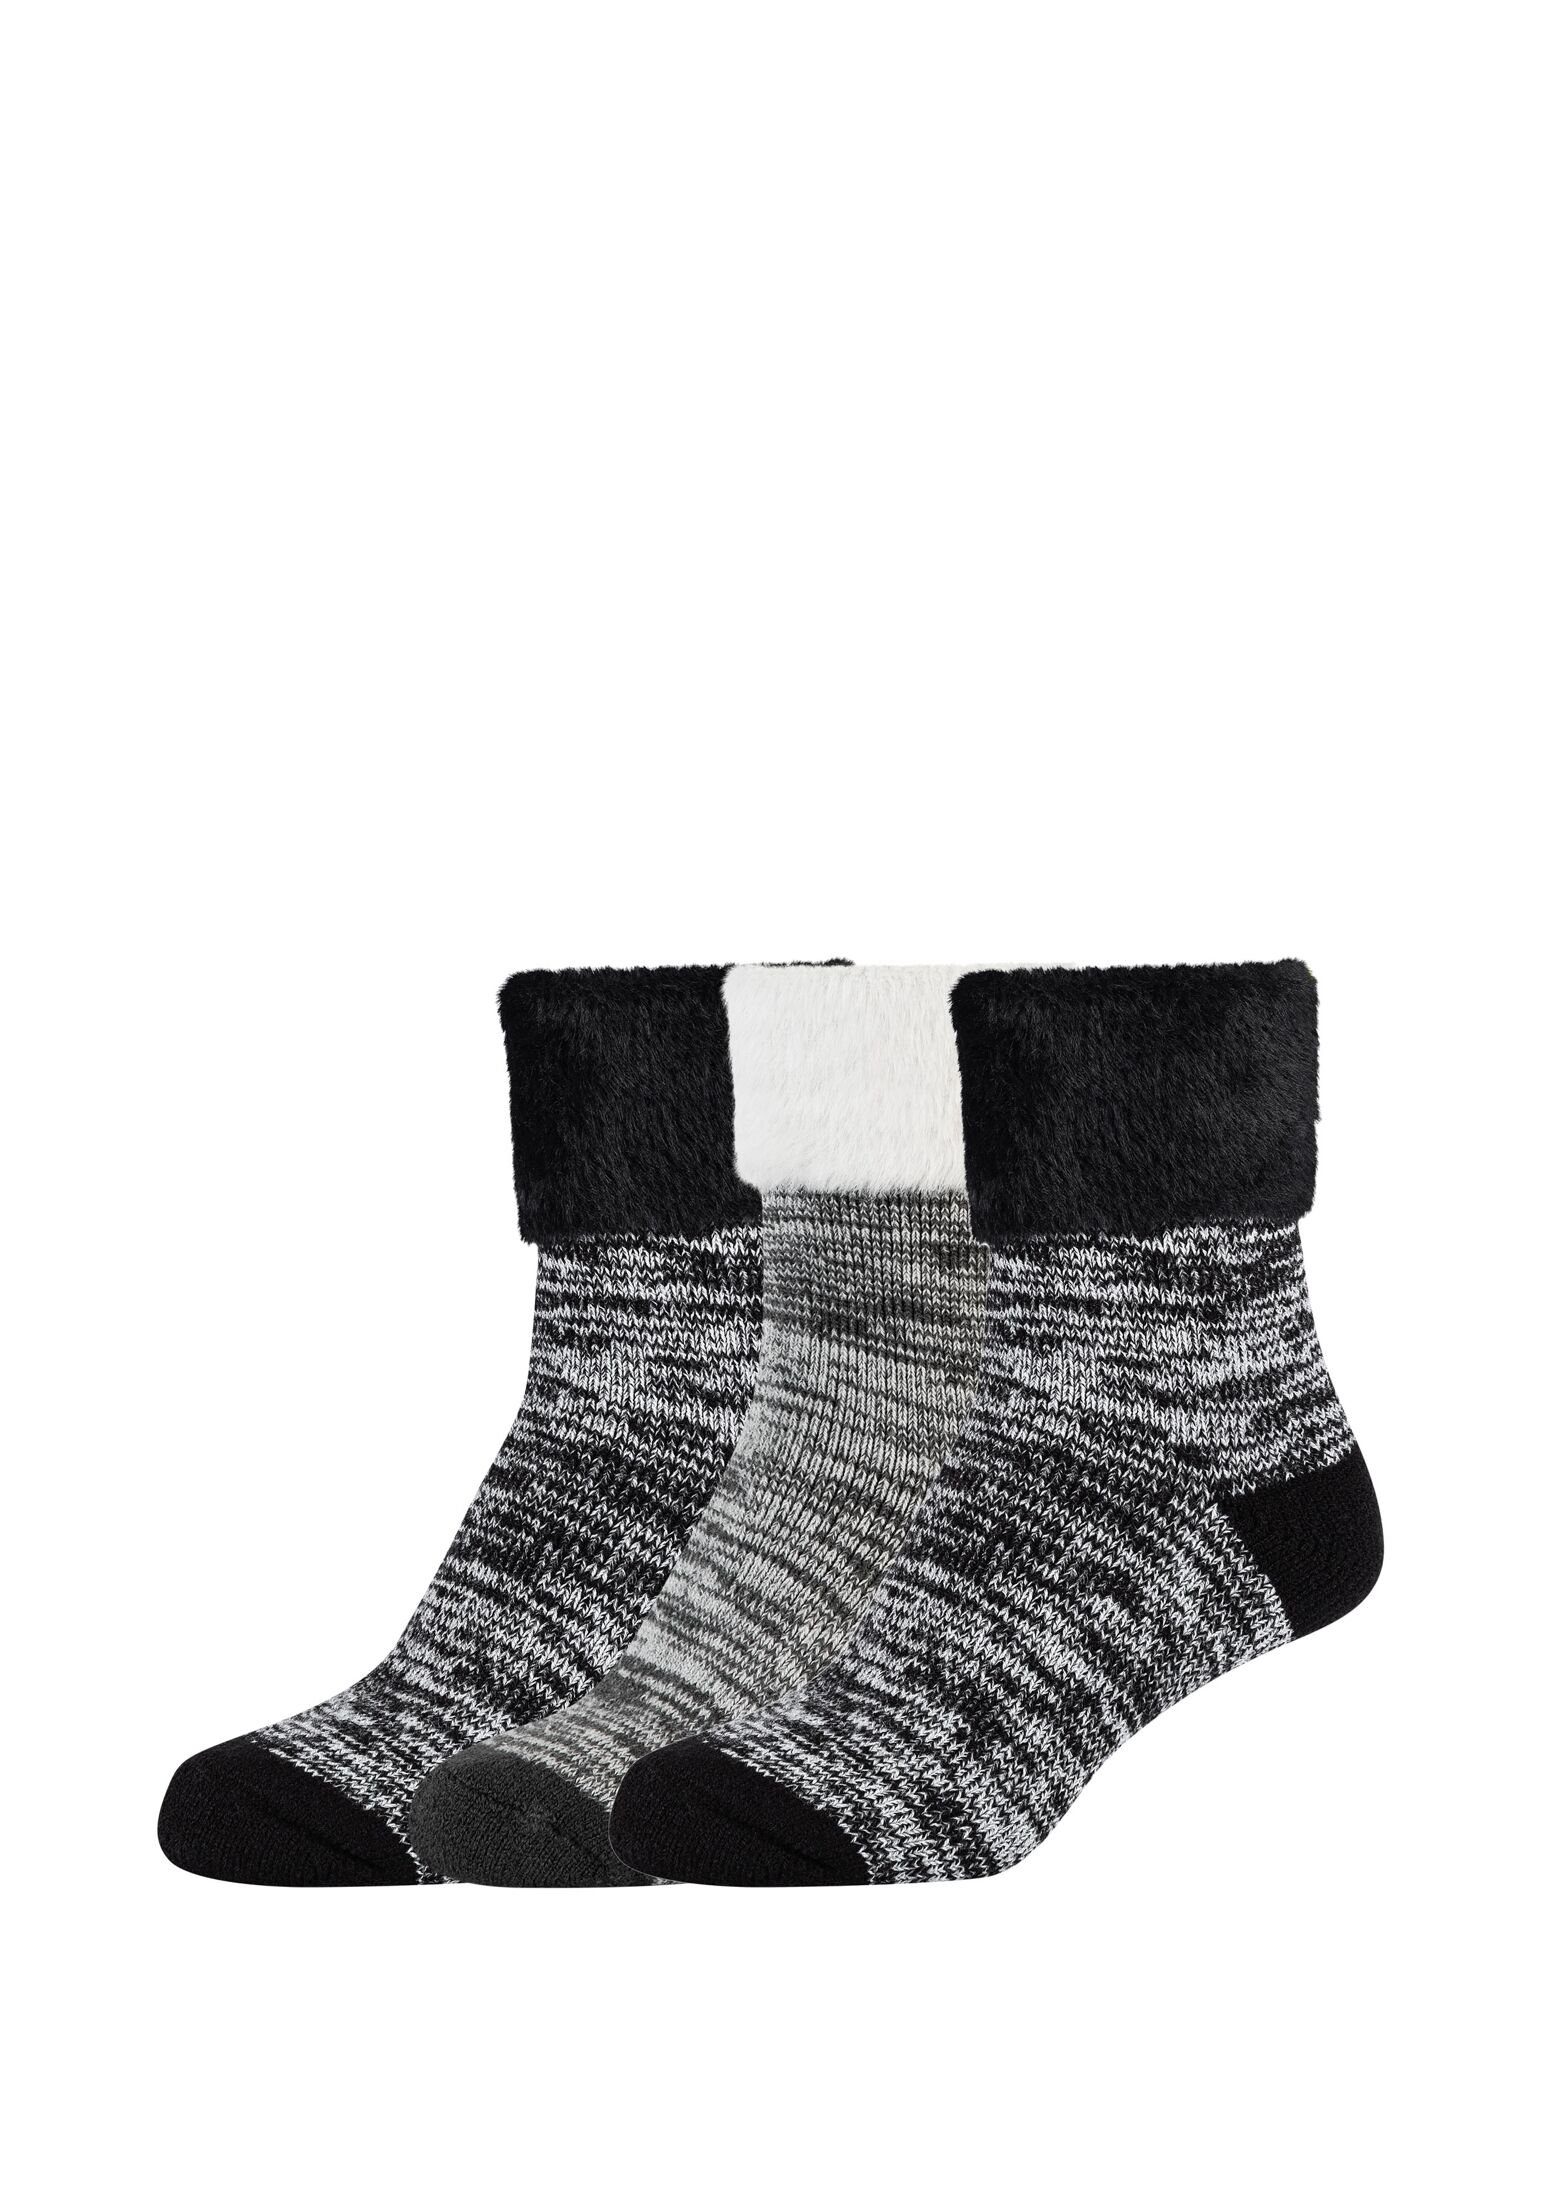 Hohe Qualität Camano Socken Socken 3er Pack, wärmendem, aus Angenehm softem gefertigt Mischgewebe